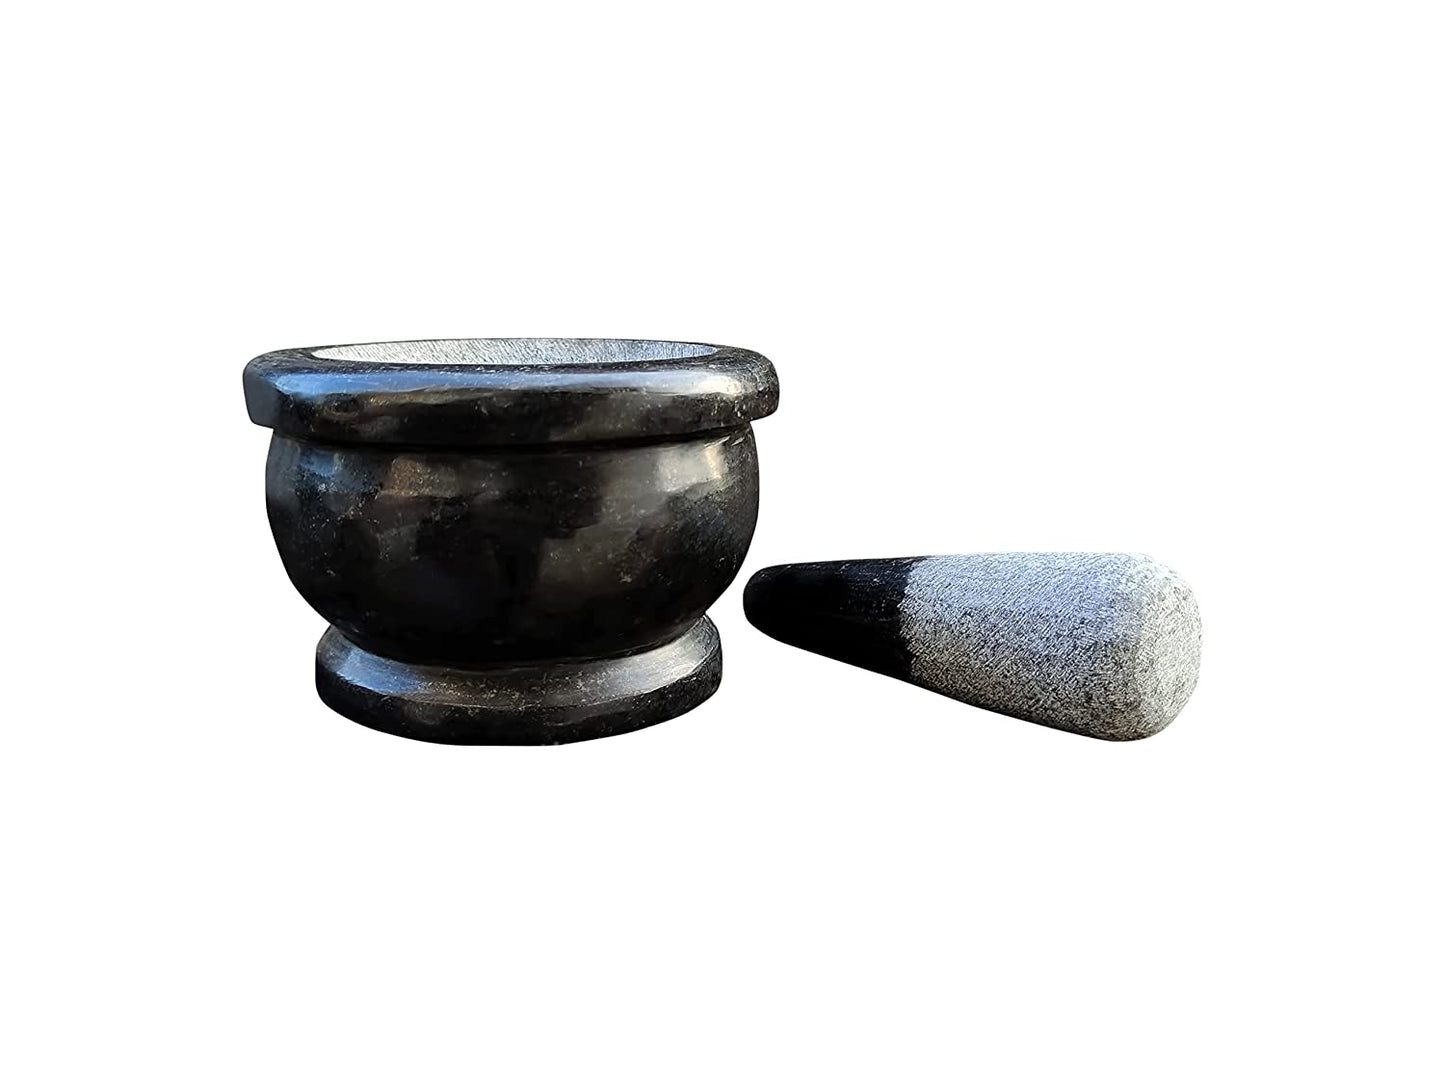 EZAHK Stone Mortar and Pestle Set (5 inch)